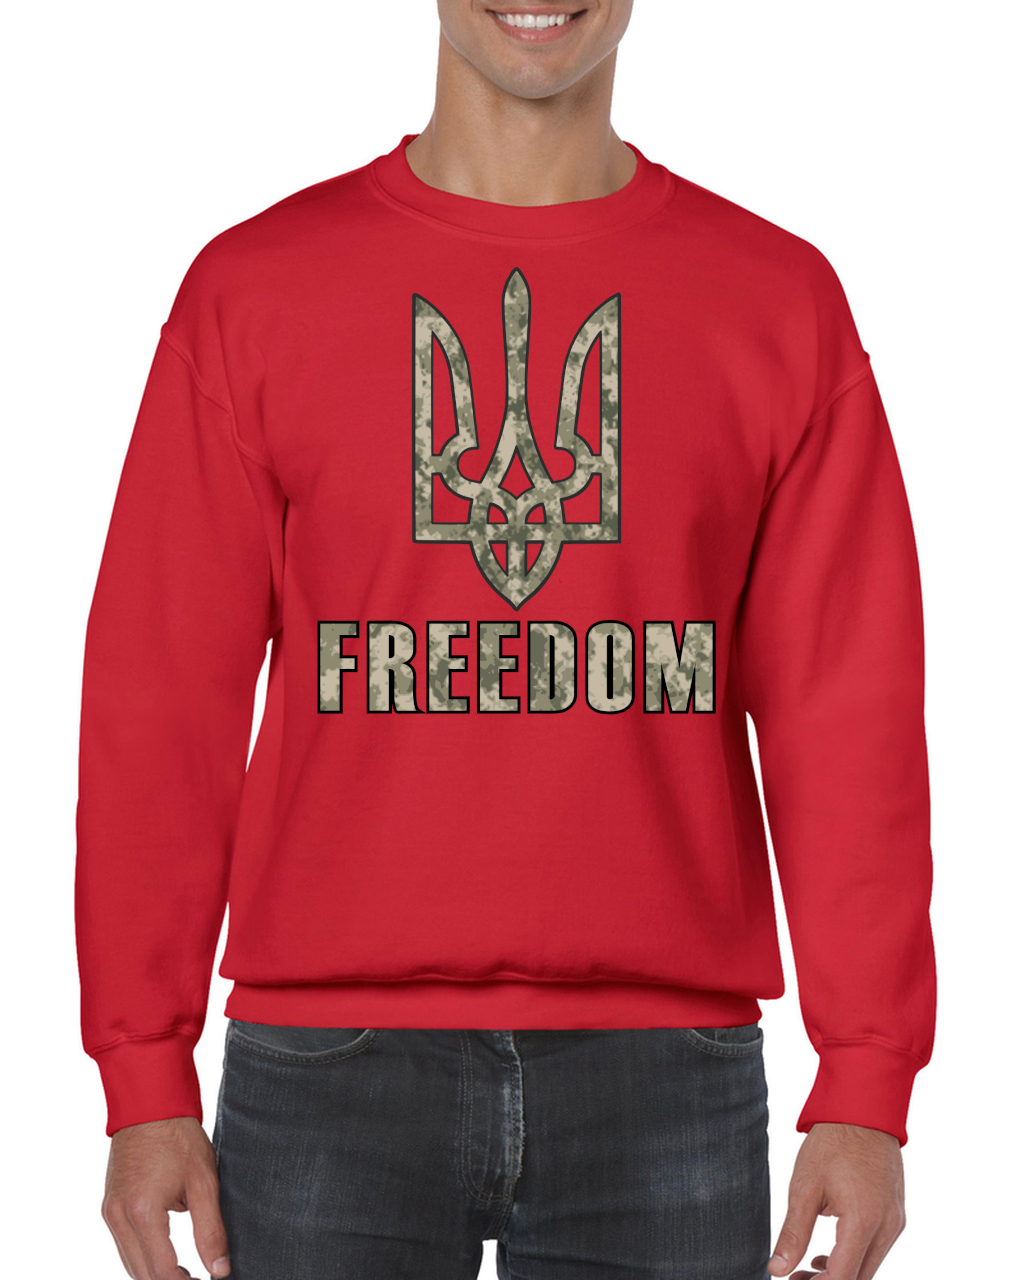 Adult unisex sweatshirt "FREEDOM"